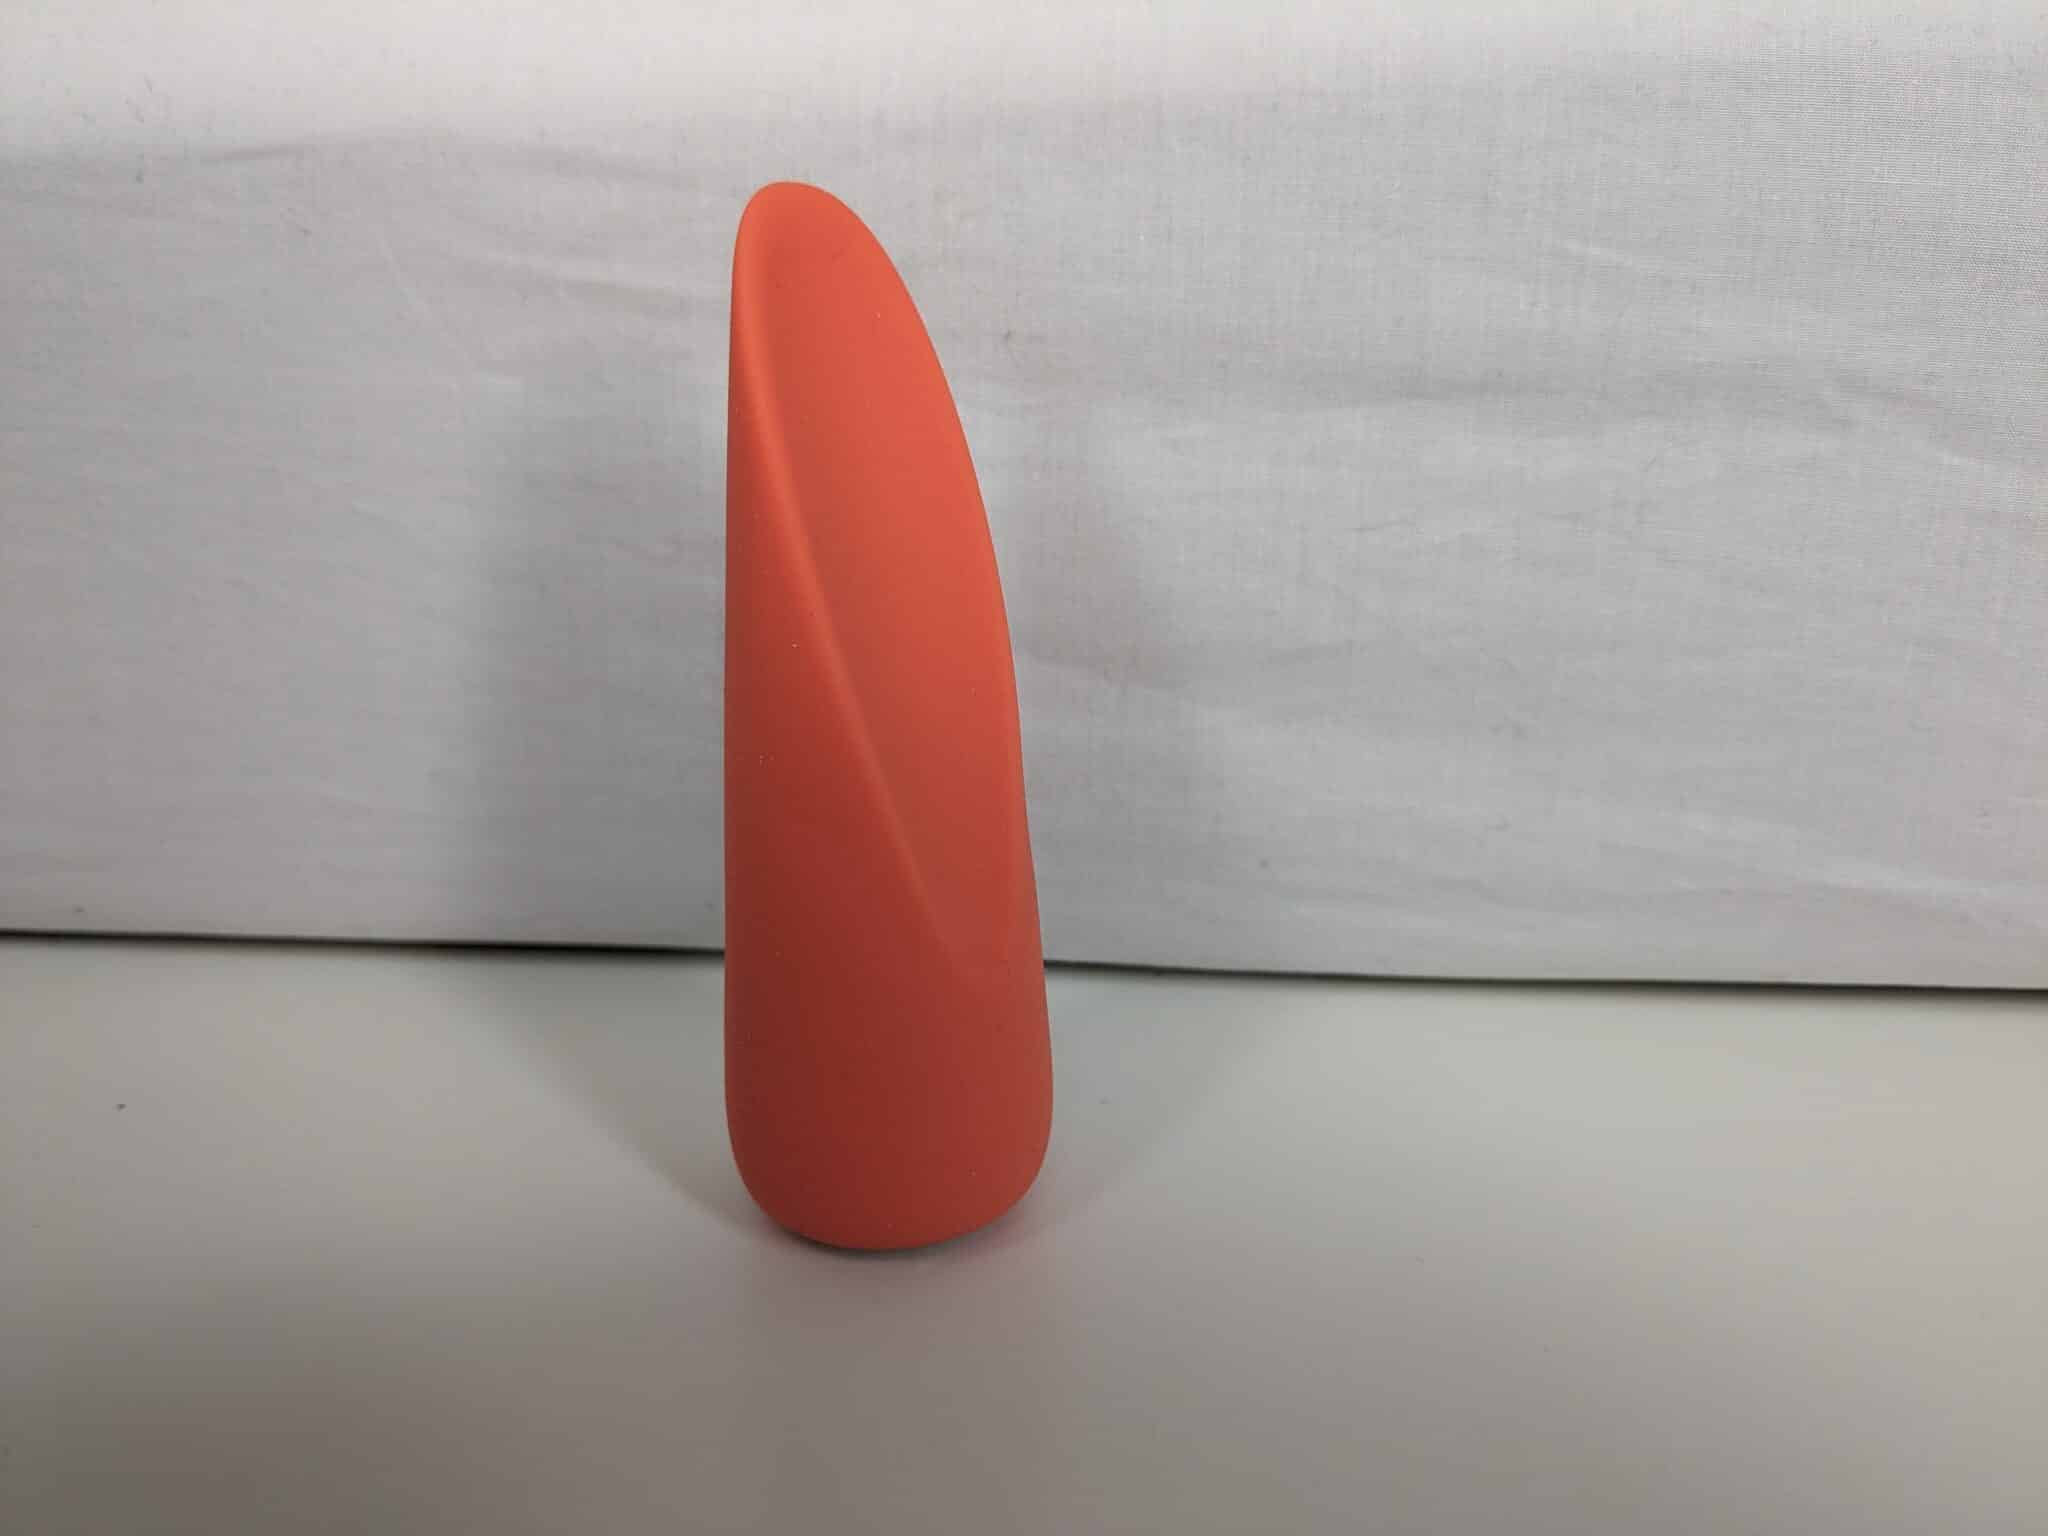 Lovehoney Tongue Teaser Vibrator Design review of the Lovehoney Tongue Teaser Vibrator